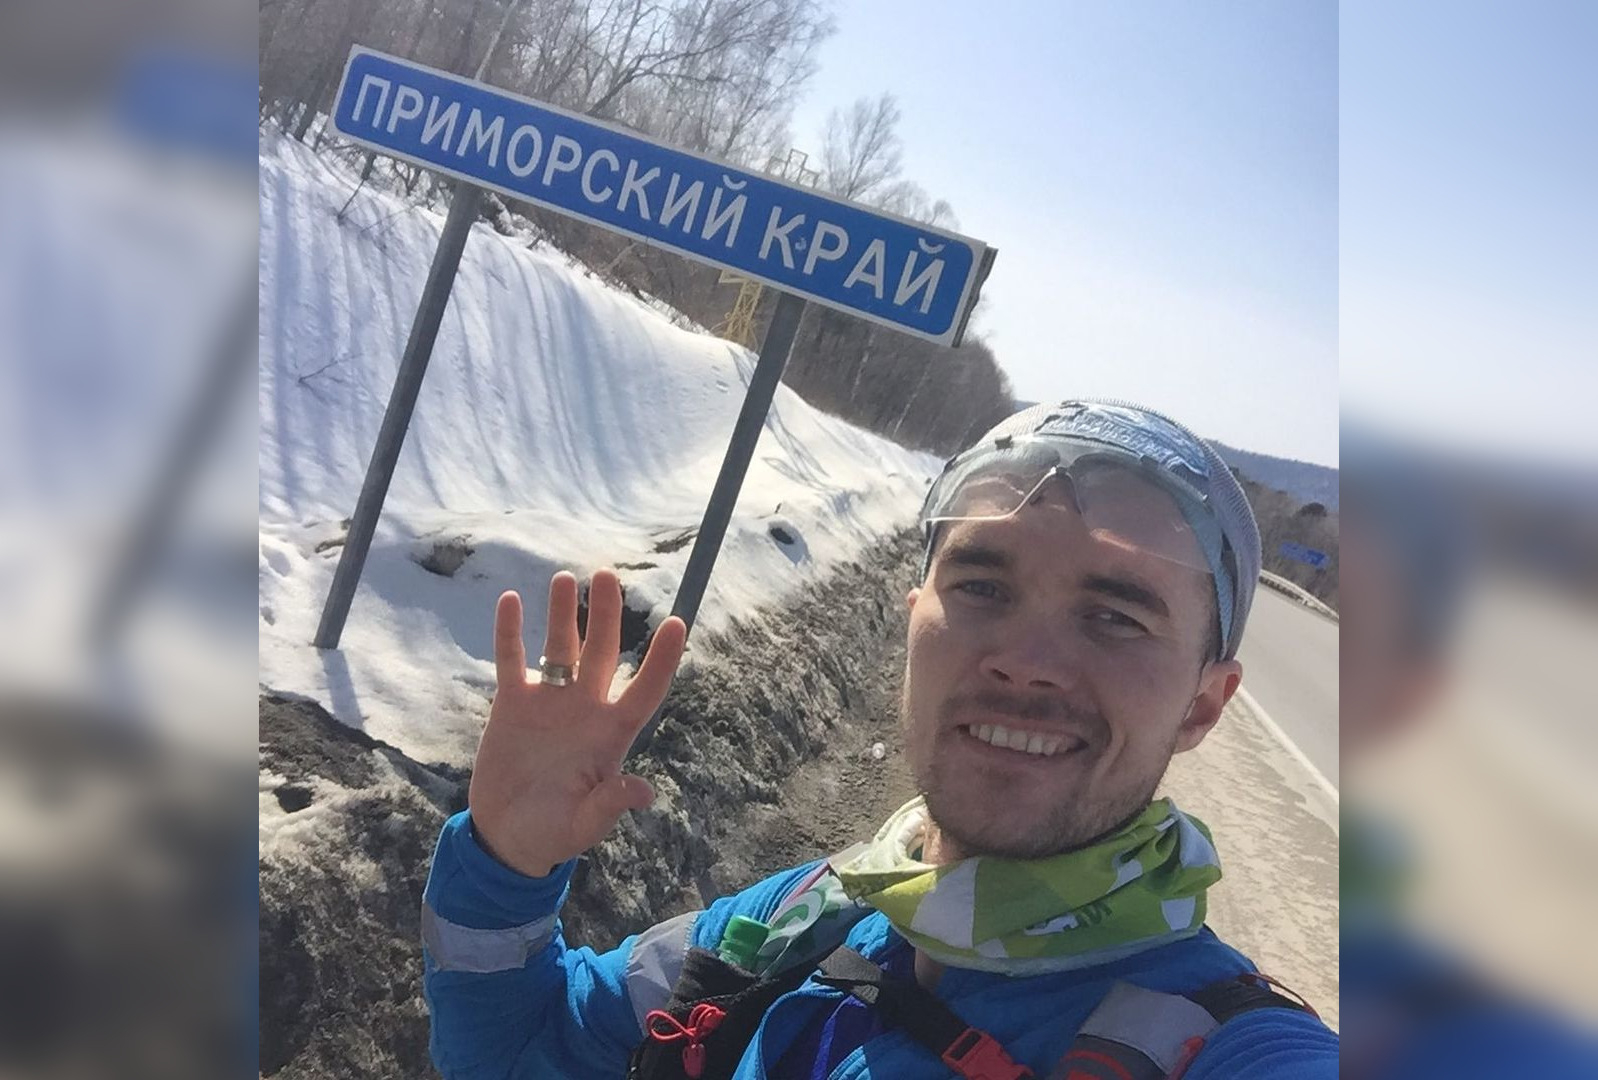 Новочебоксарец добежал от Петербурга до Приморского края спустя год